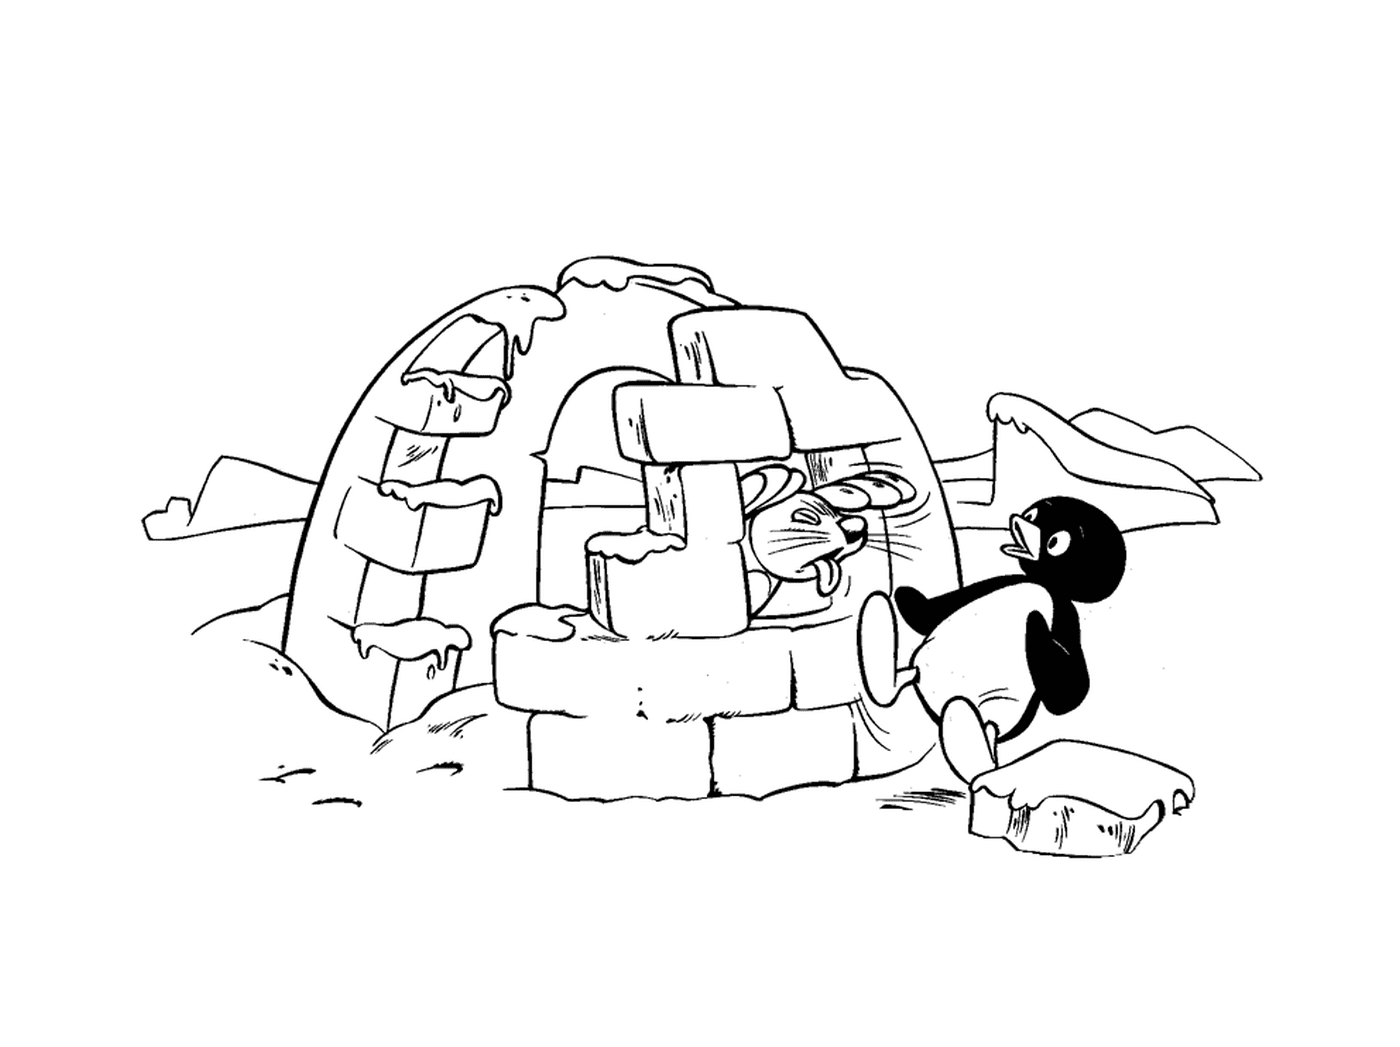  Pingu 靠近一个印有印章的冰屋 